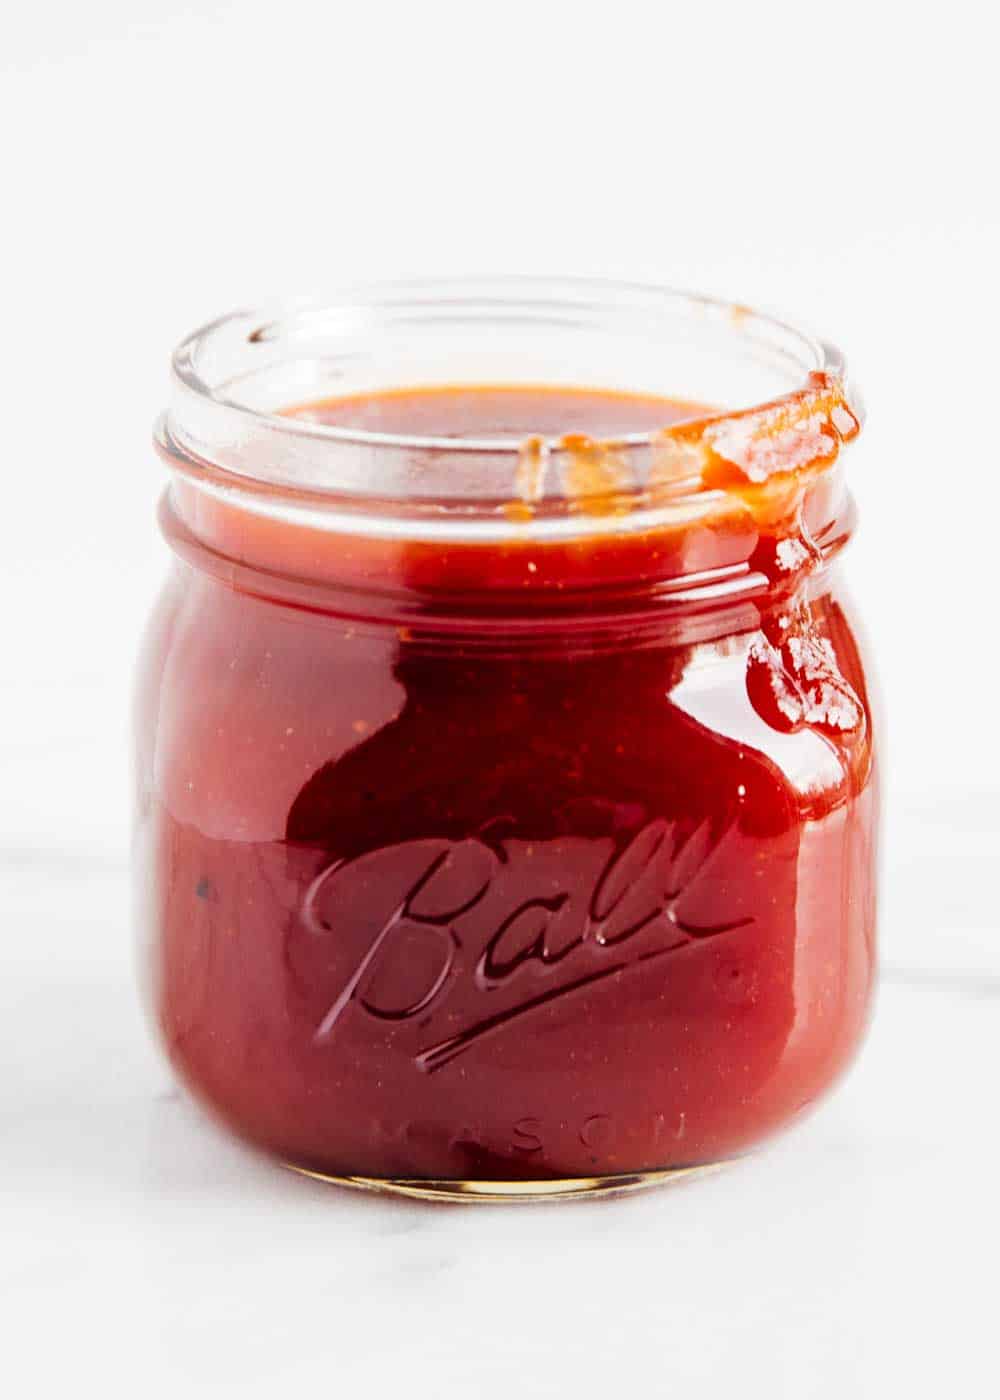 Homemade bbq sauce in glass jar.